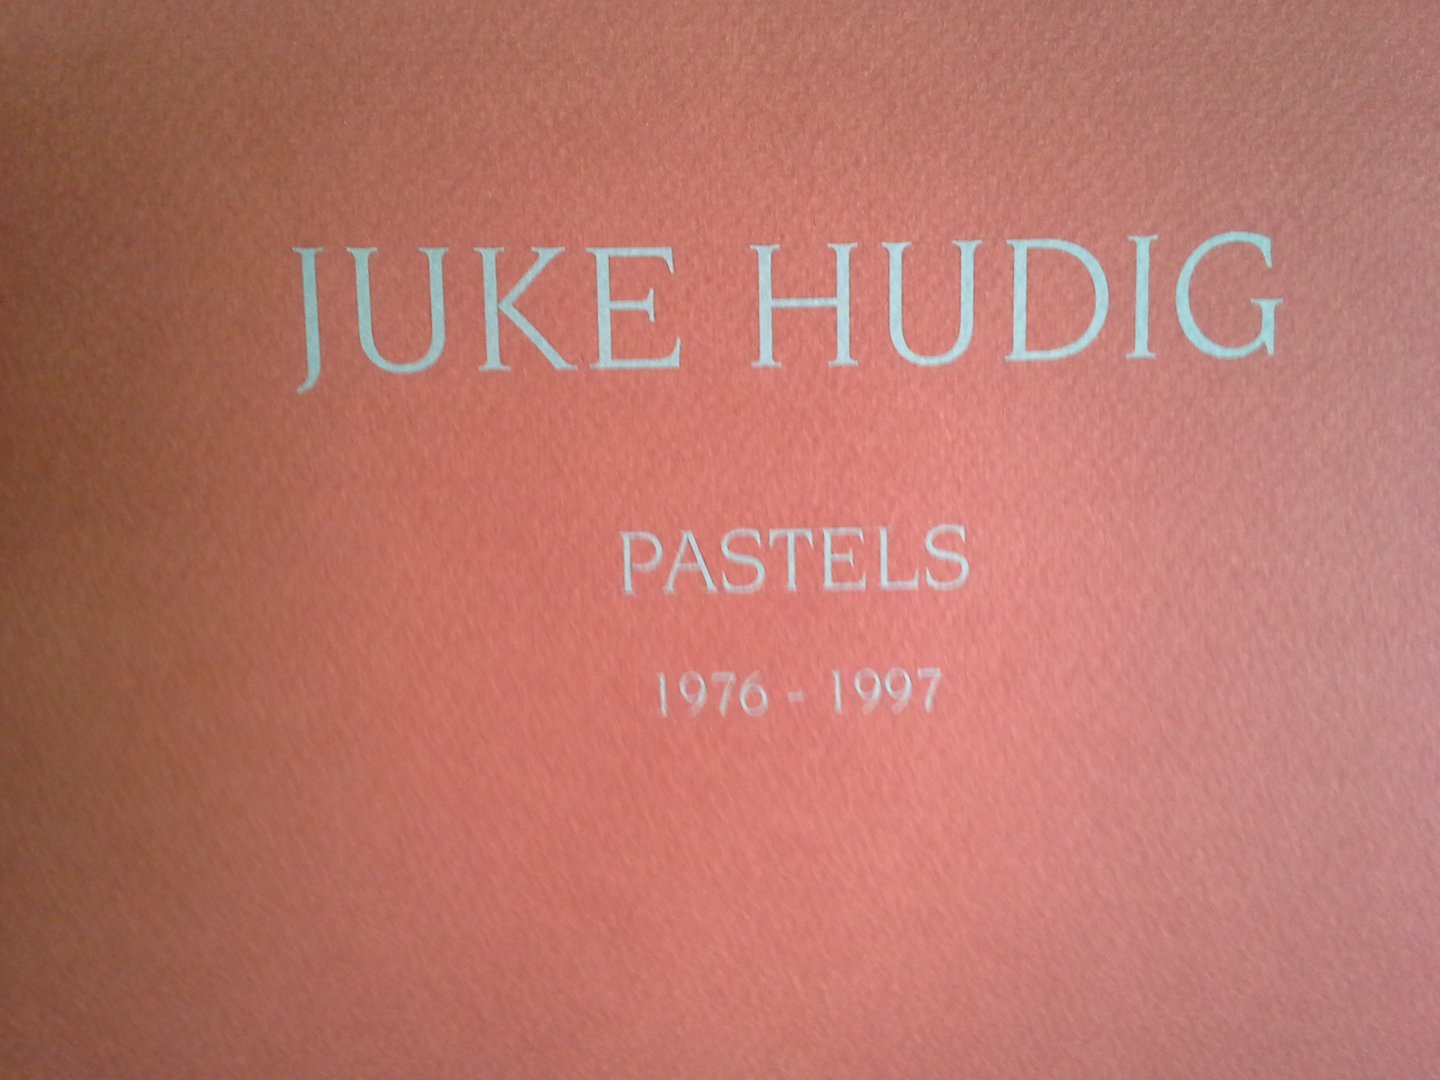  - JUKE HUDIG PASTELS 1976-1997